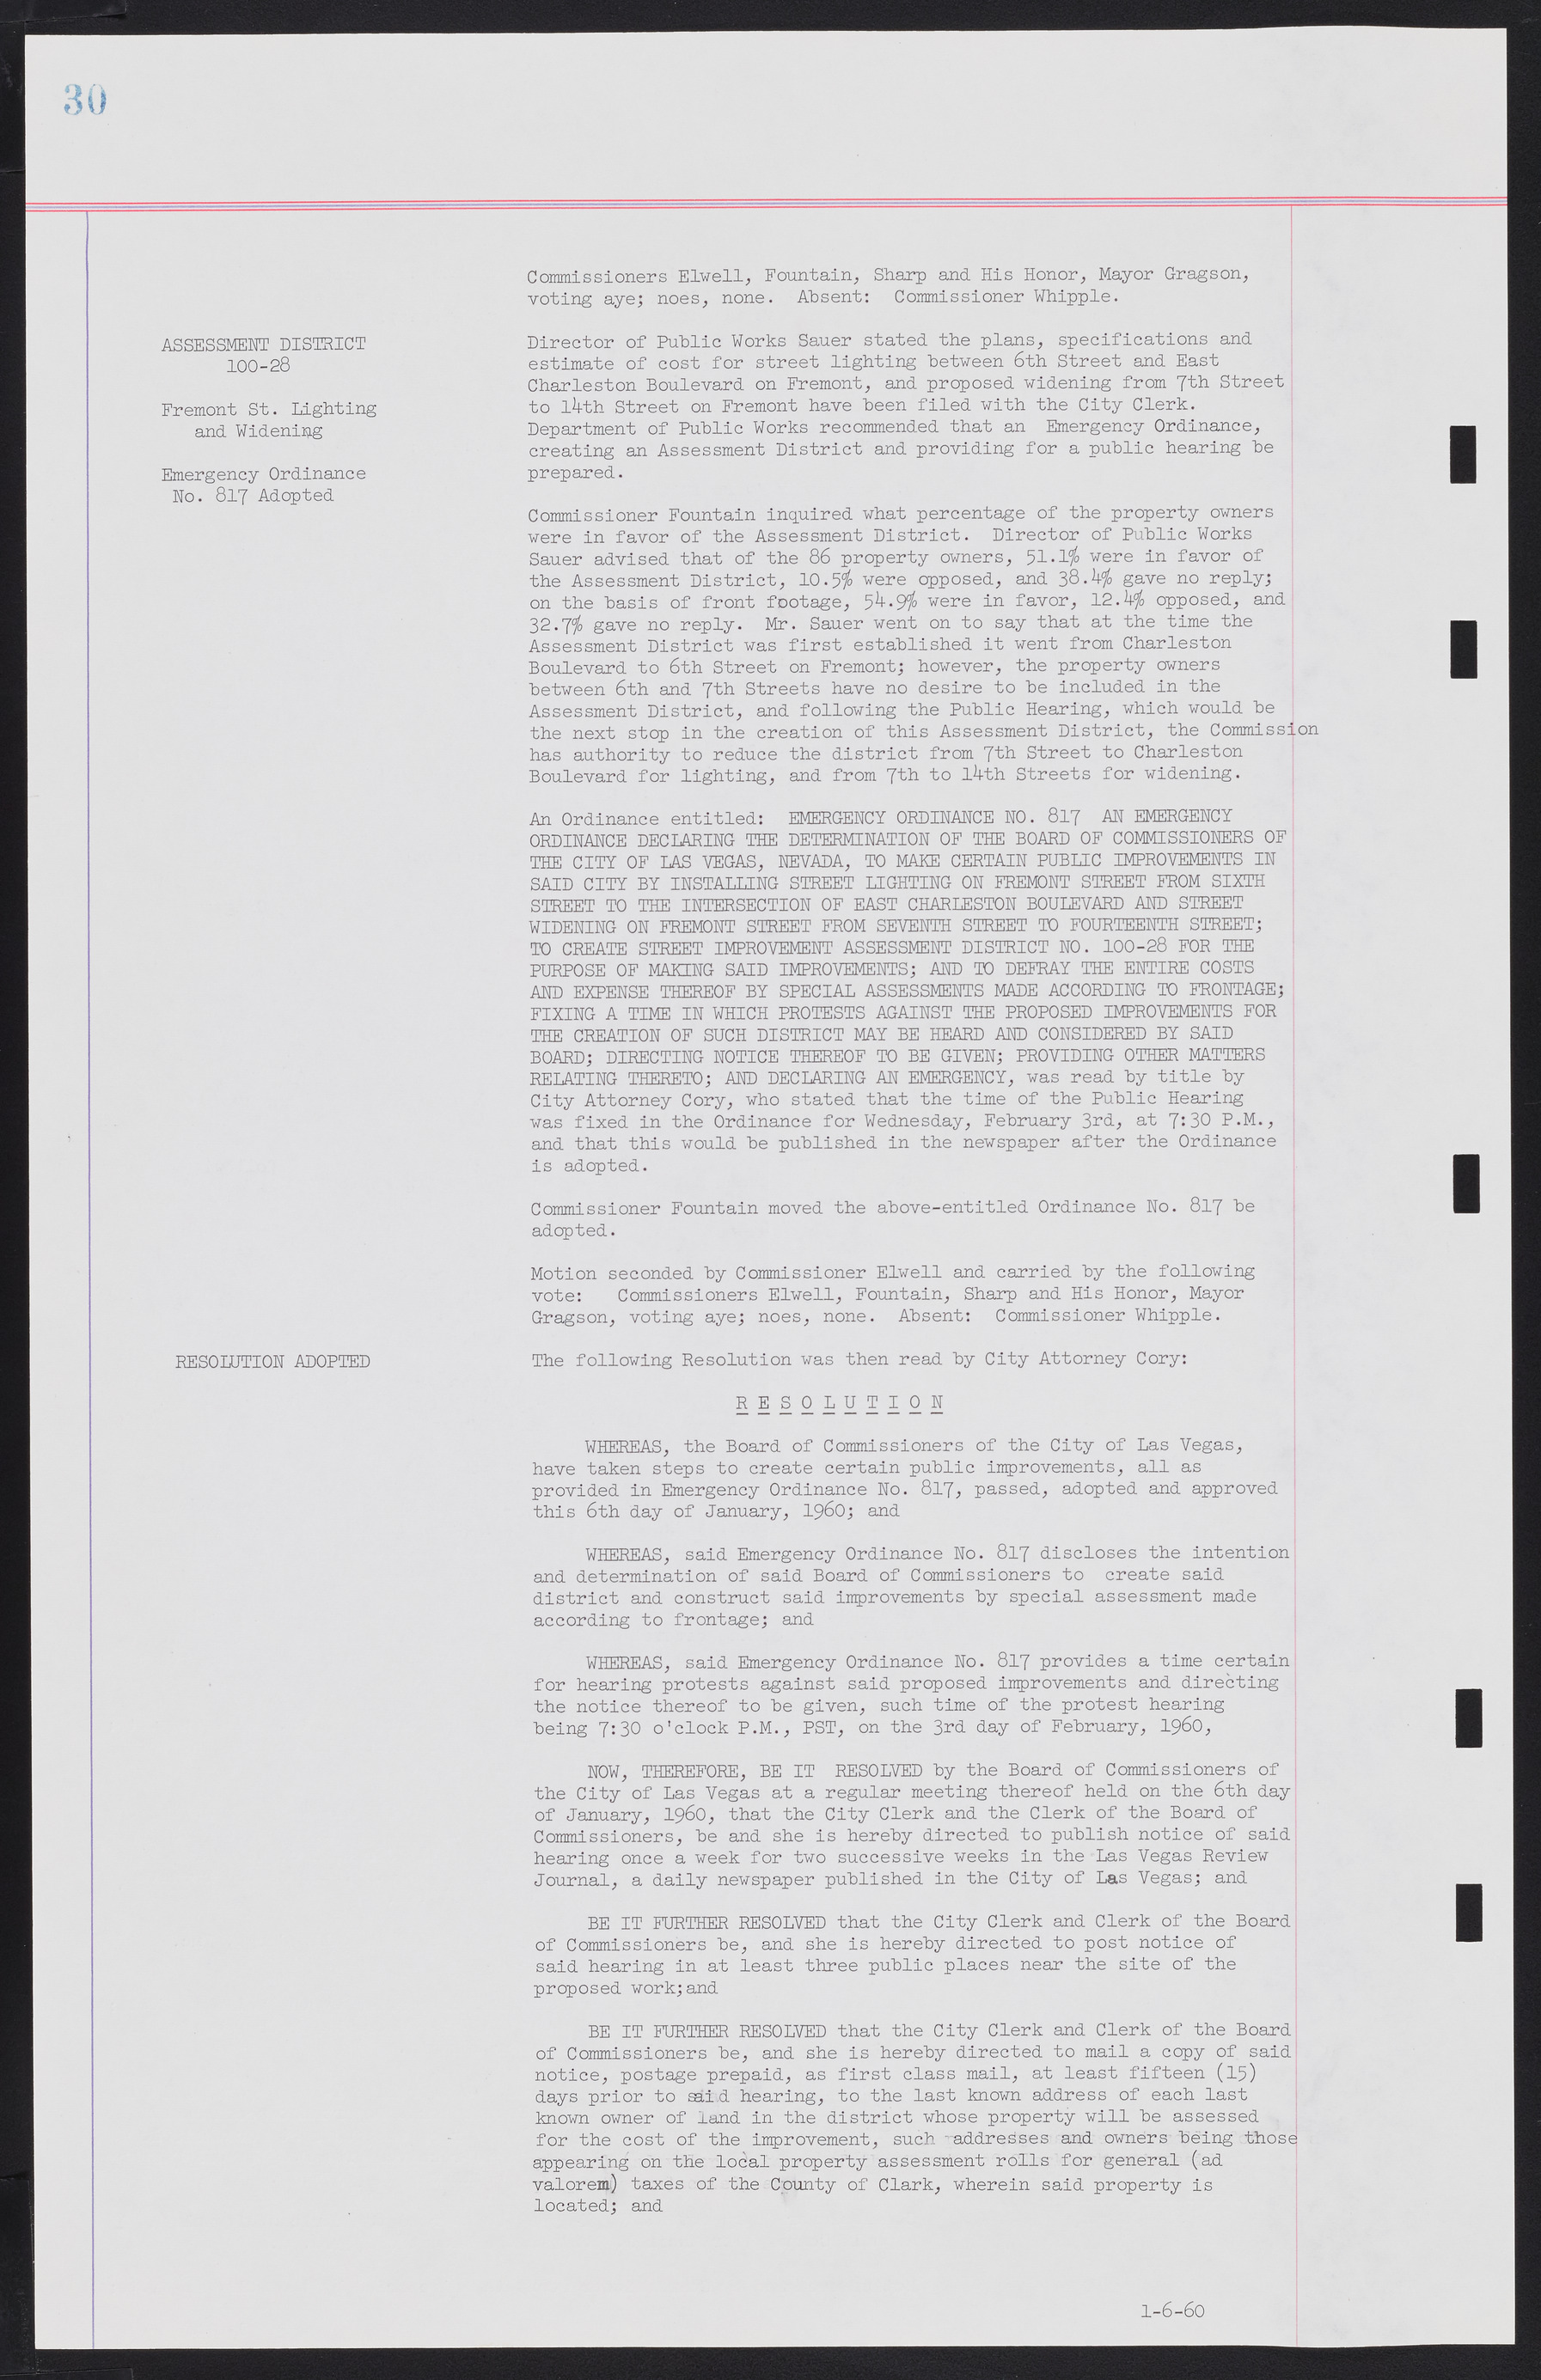 Las Vegas City Commission Minutes, December 8, 1959 to February 17, 1960, lvc000012-34